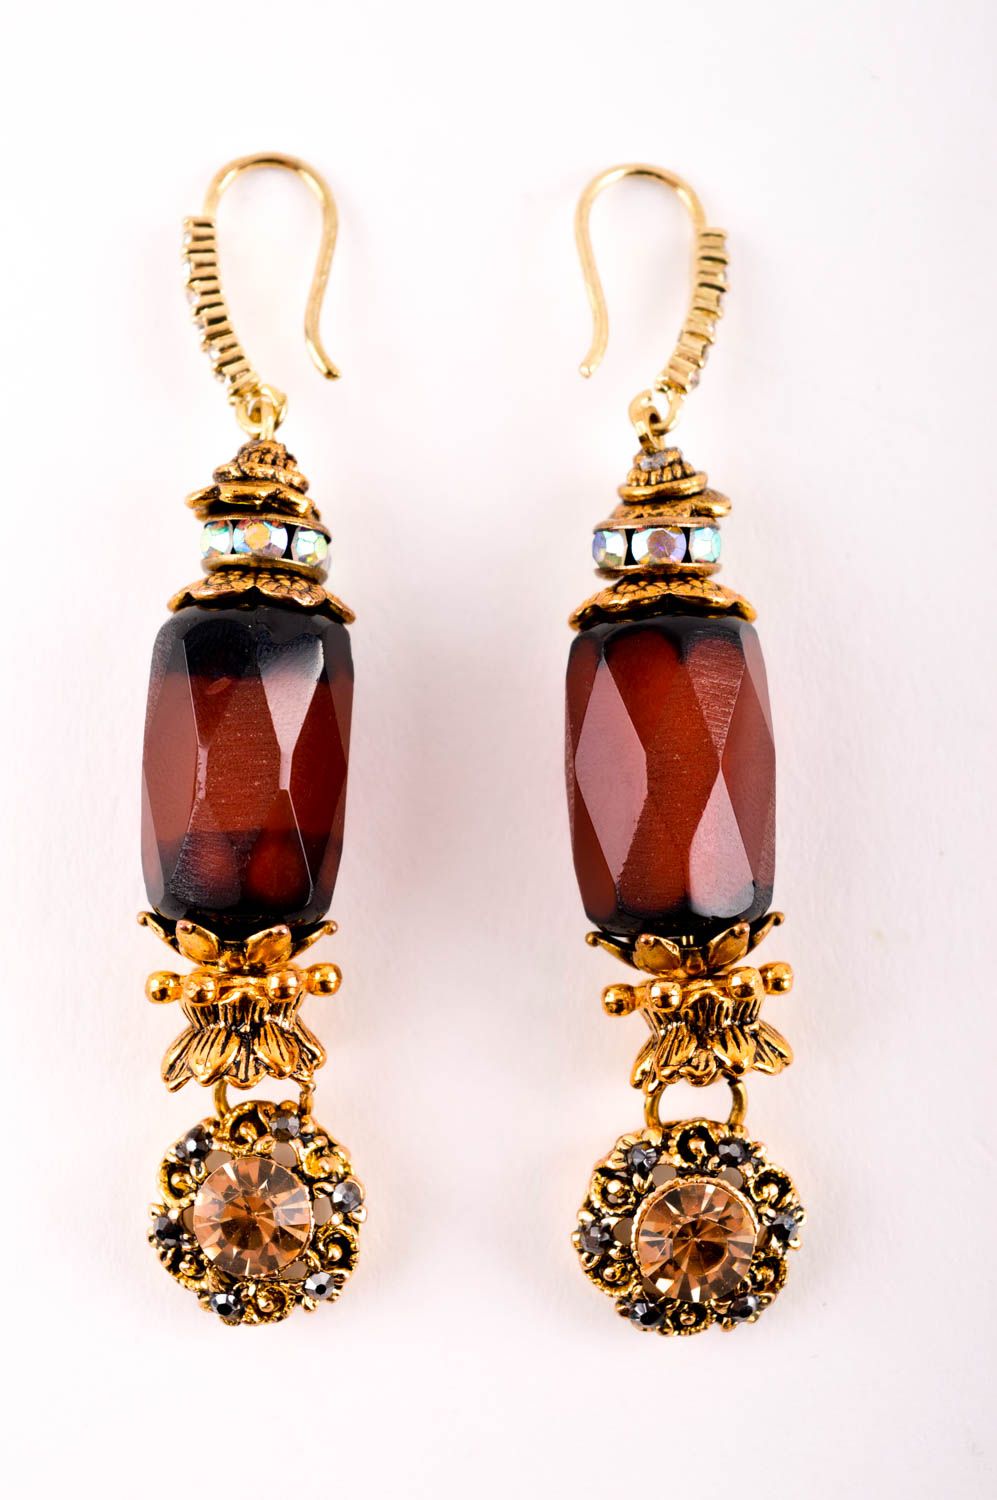 Handmade earrings designer earrings with stones unusual jewelry gift for her photo 3